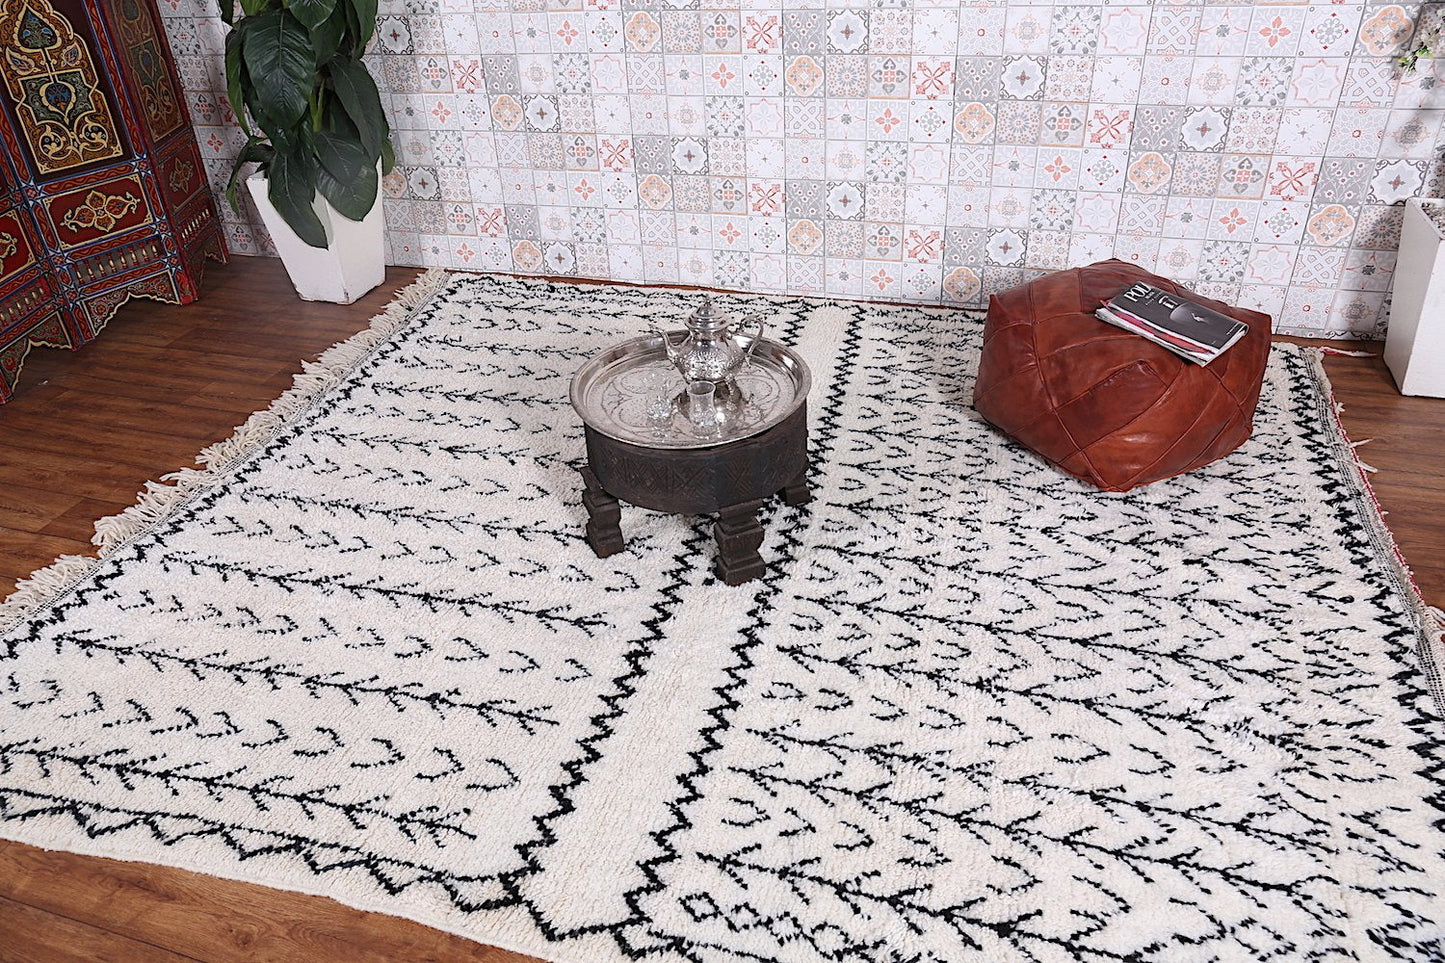 Custom Beni ourain rug, All wool moroccan rug